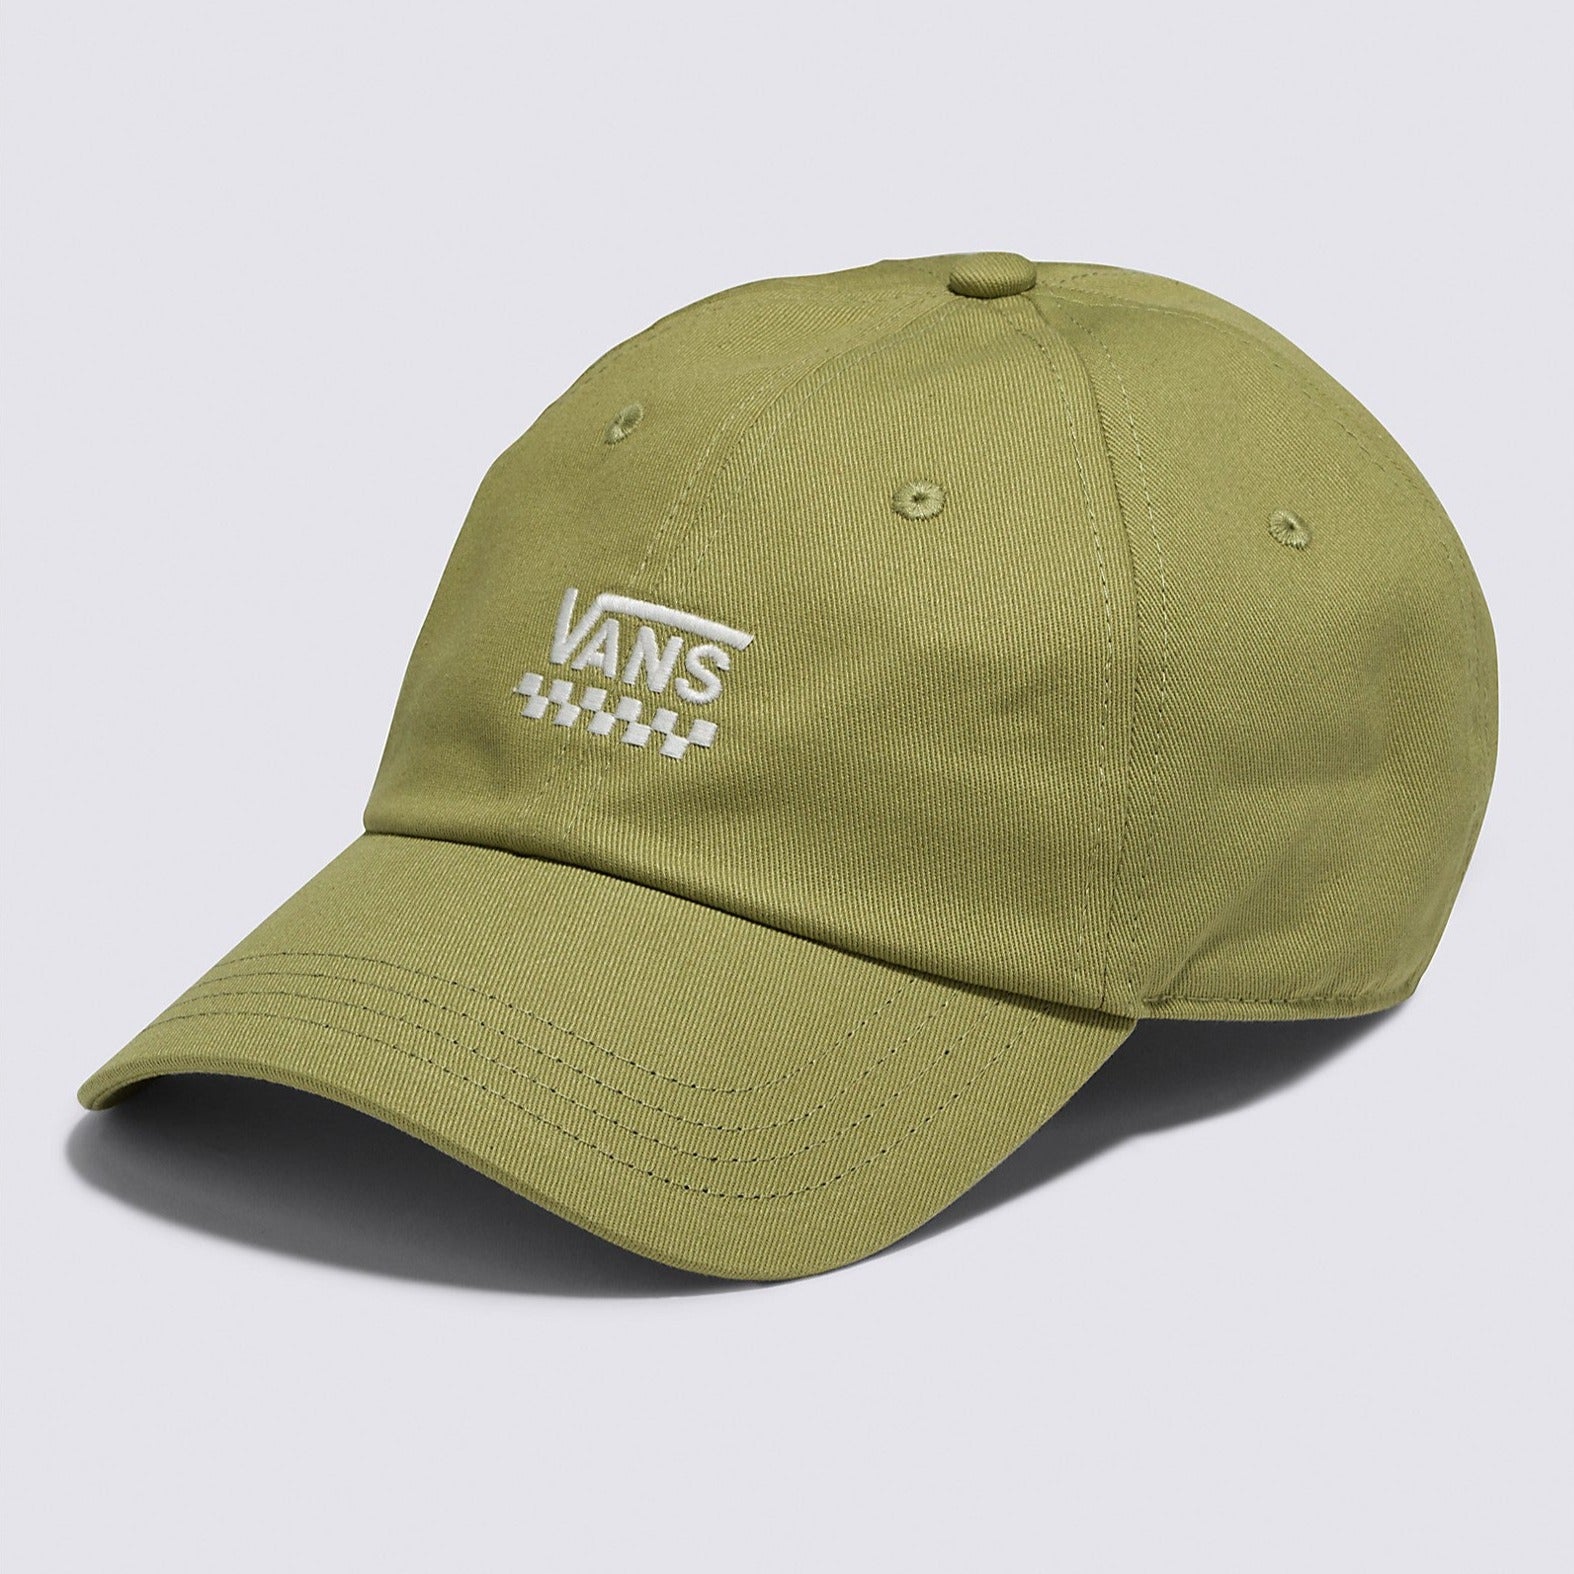 Vans Court Side Hat - Green Olive Baseball Cap for men and women